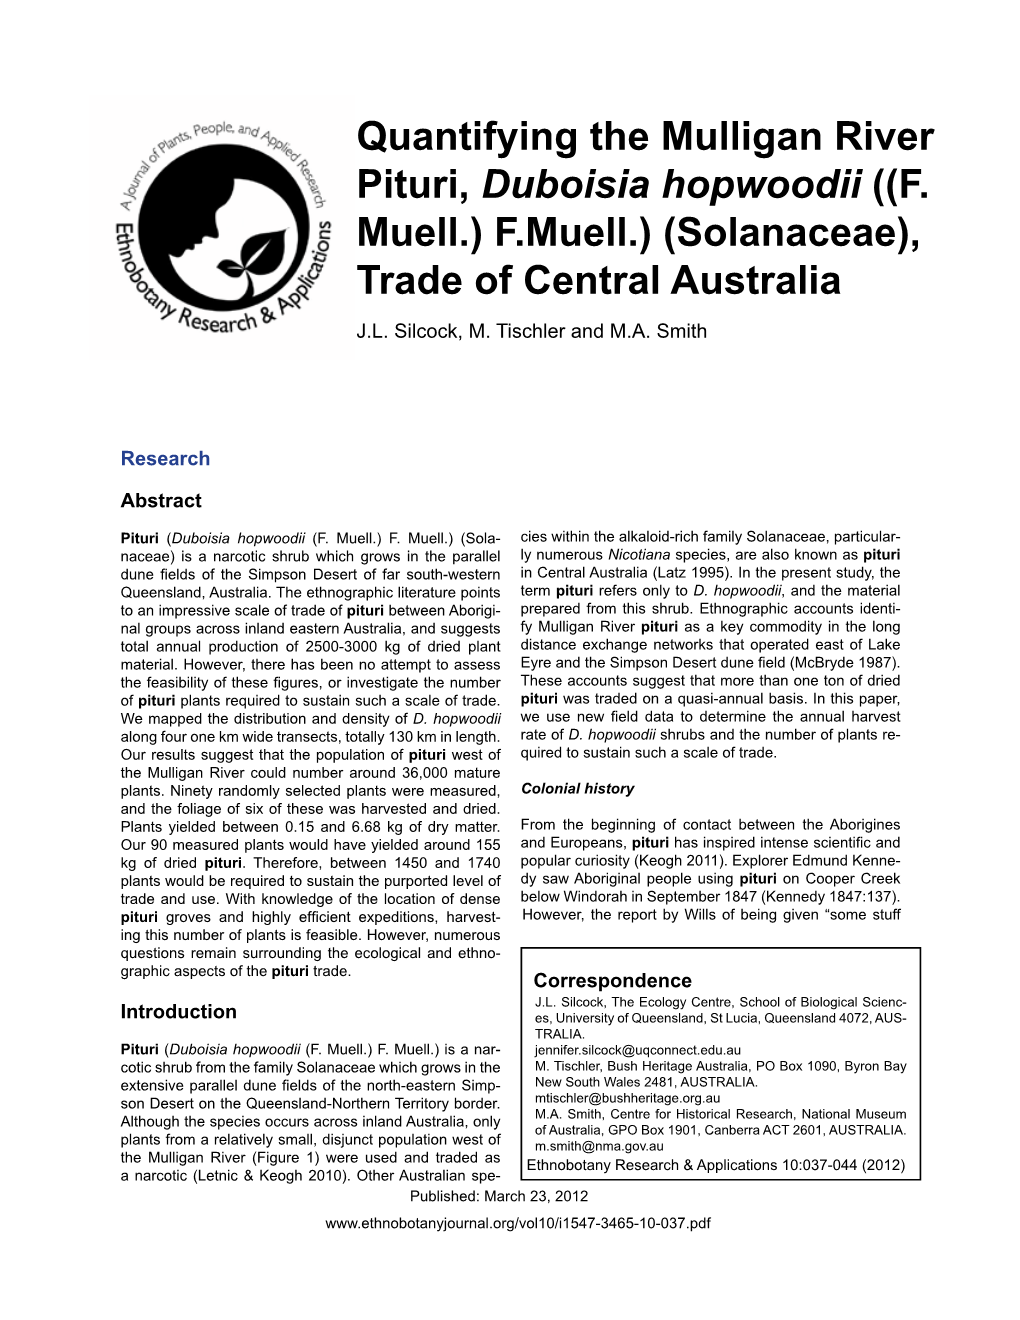 Quantifying the Mulligan River Pituri, Duboisia Hopwoodii ((F